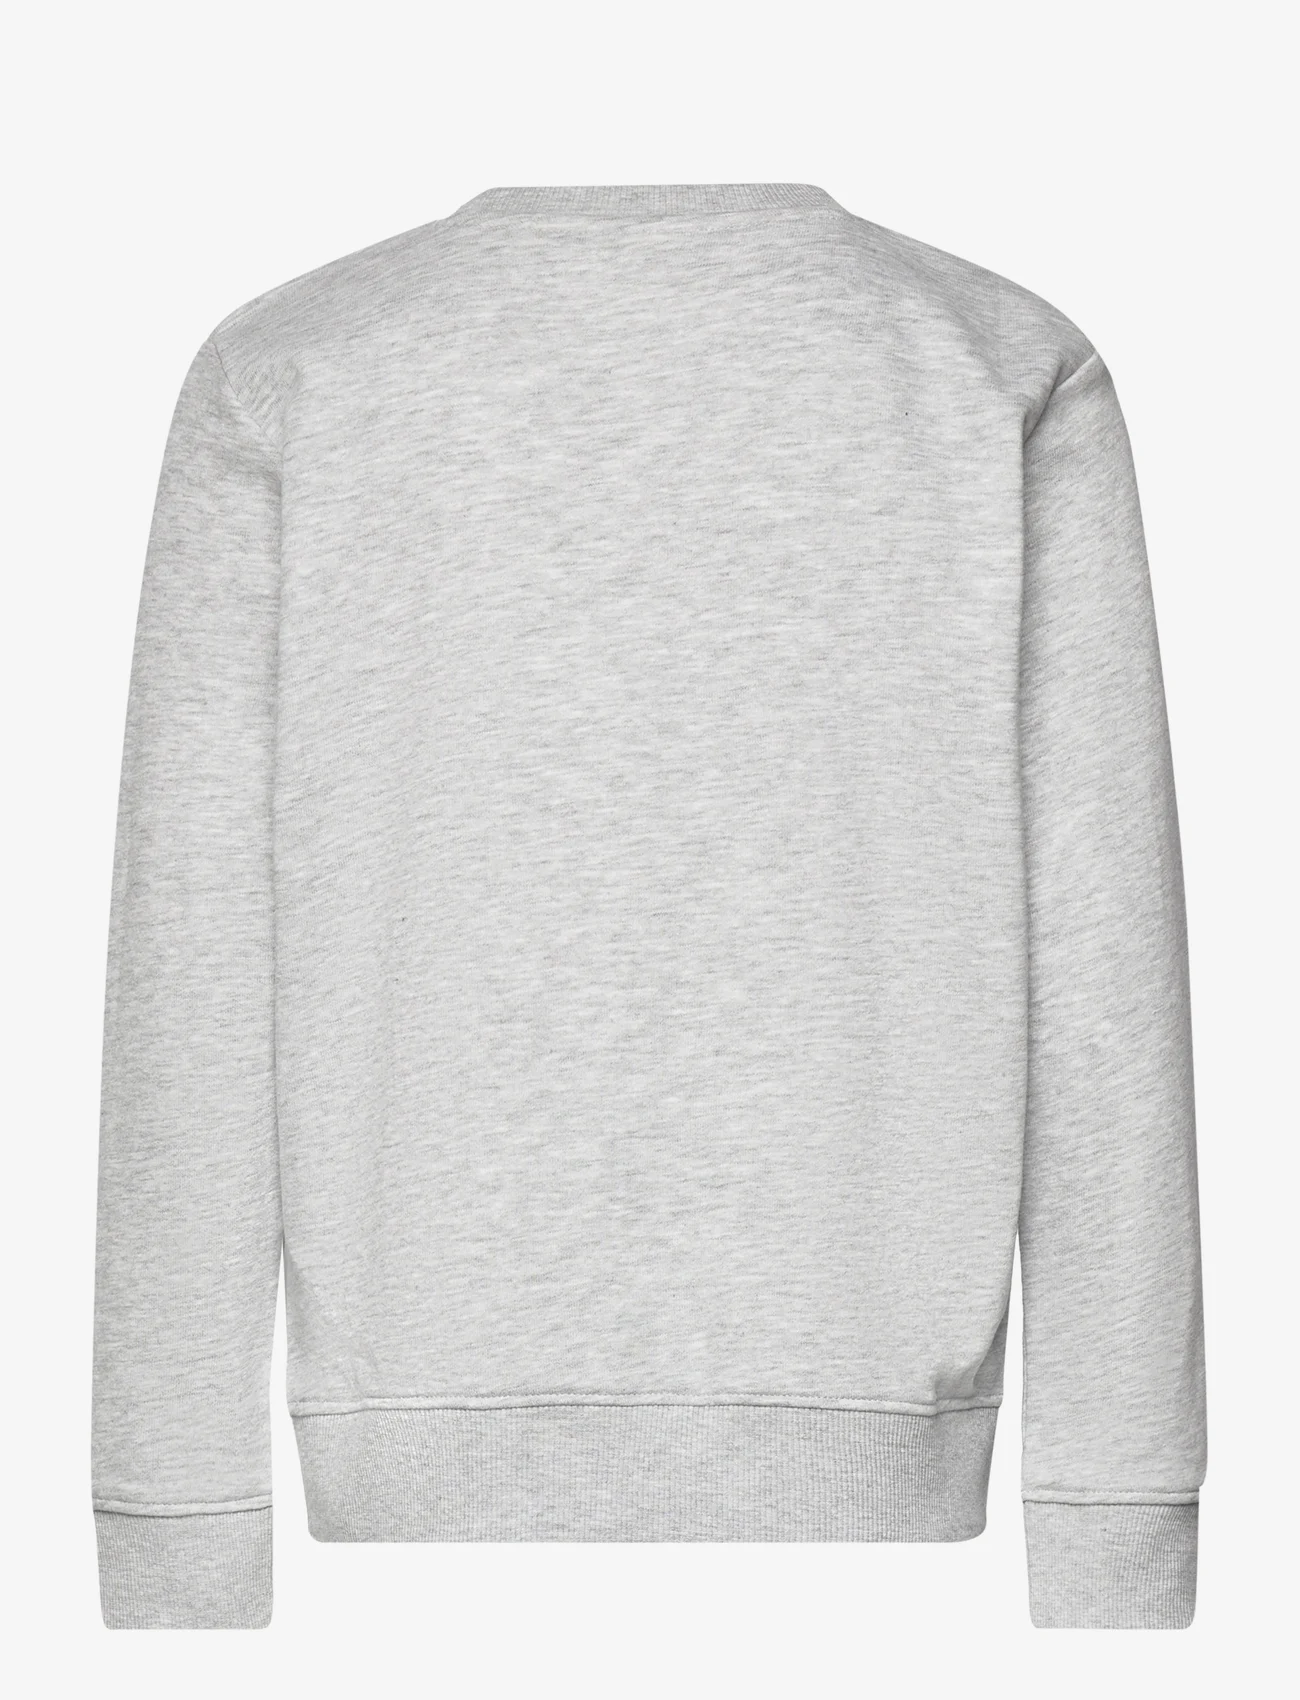 Tom Tailor - special artwork sweatshirt - svetarit - light stone grey melange - 1